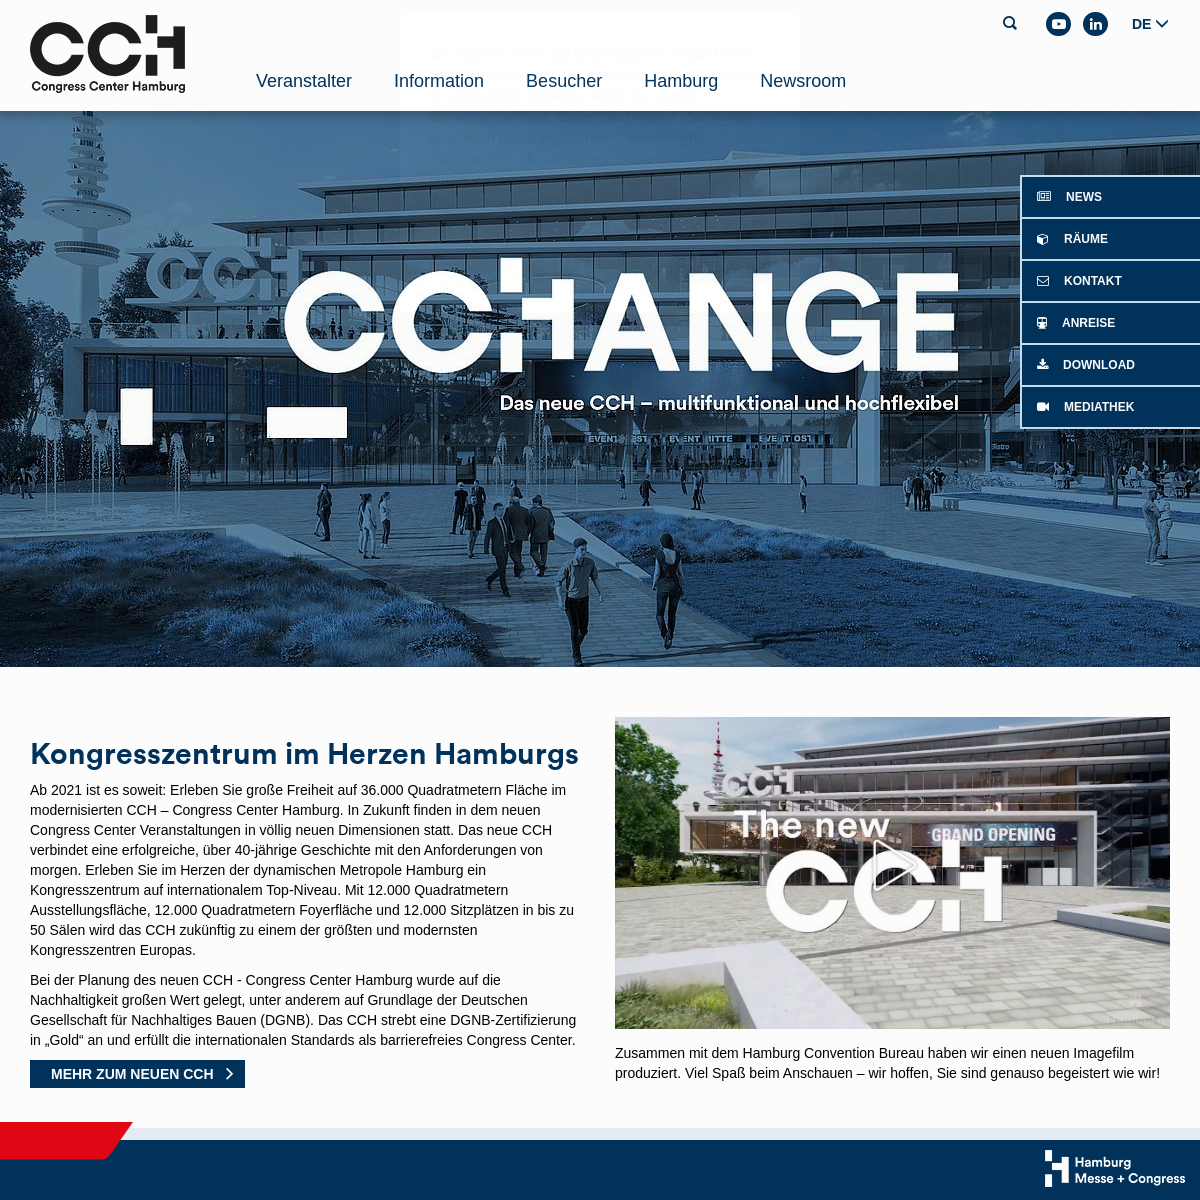 A complete backup of cch.de